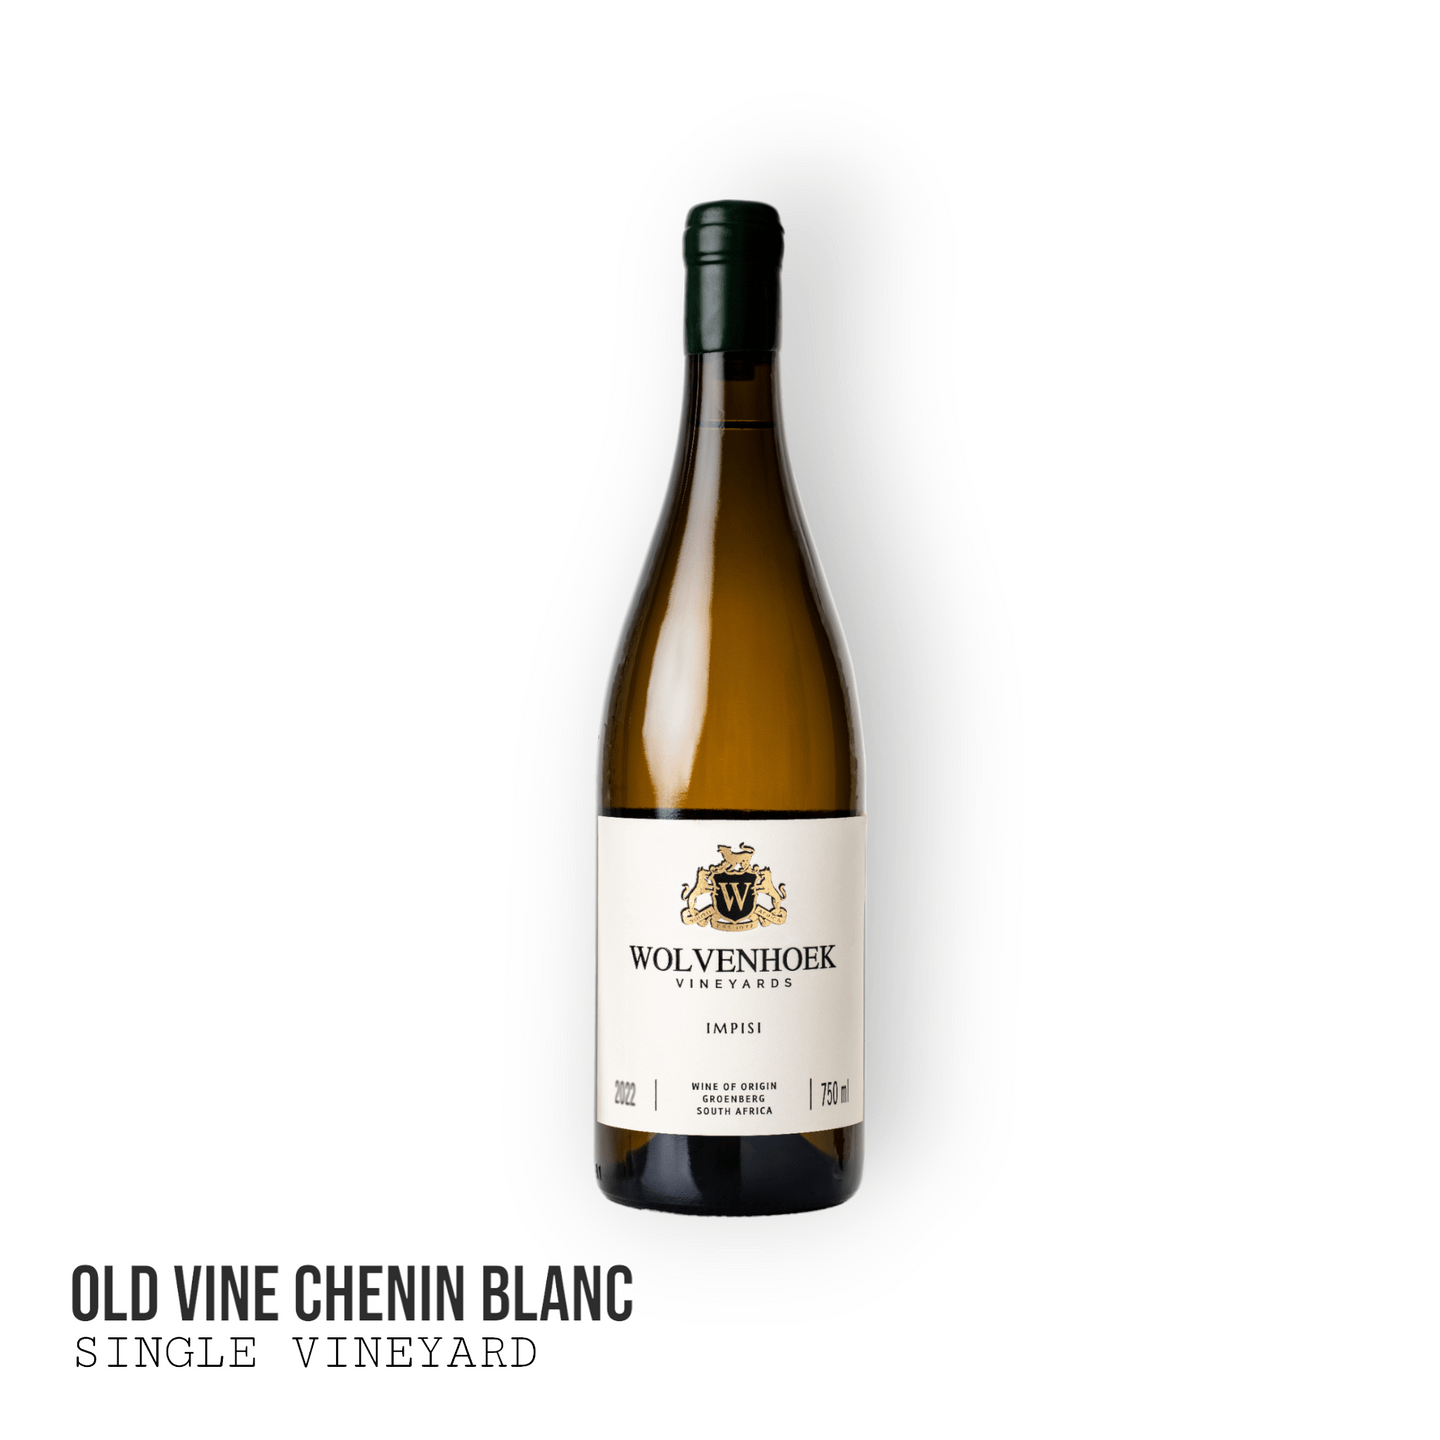 Impisi-old vine chenin blanc